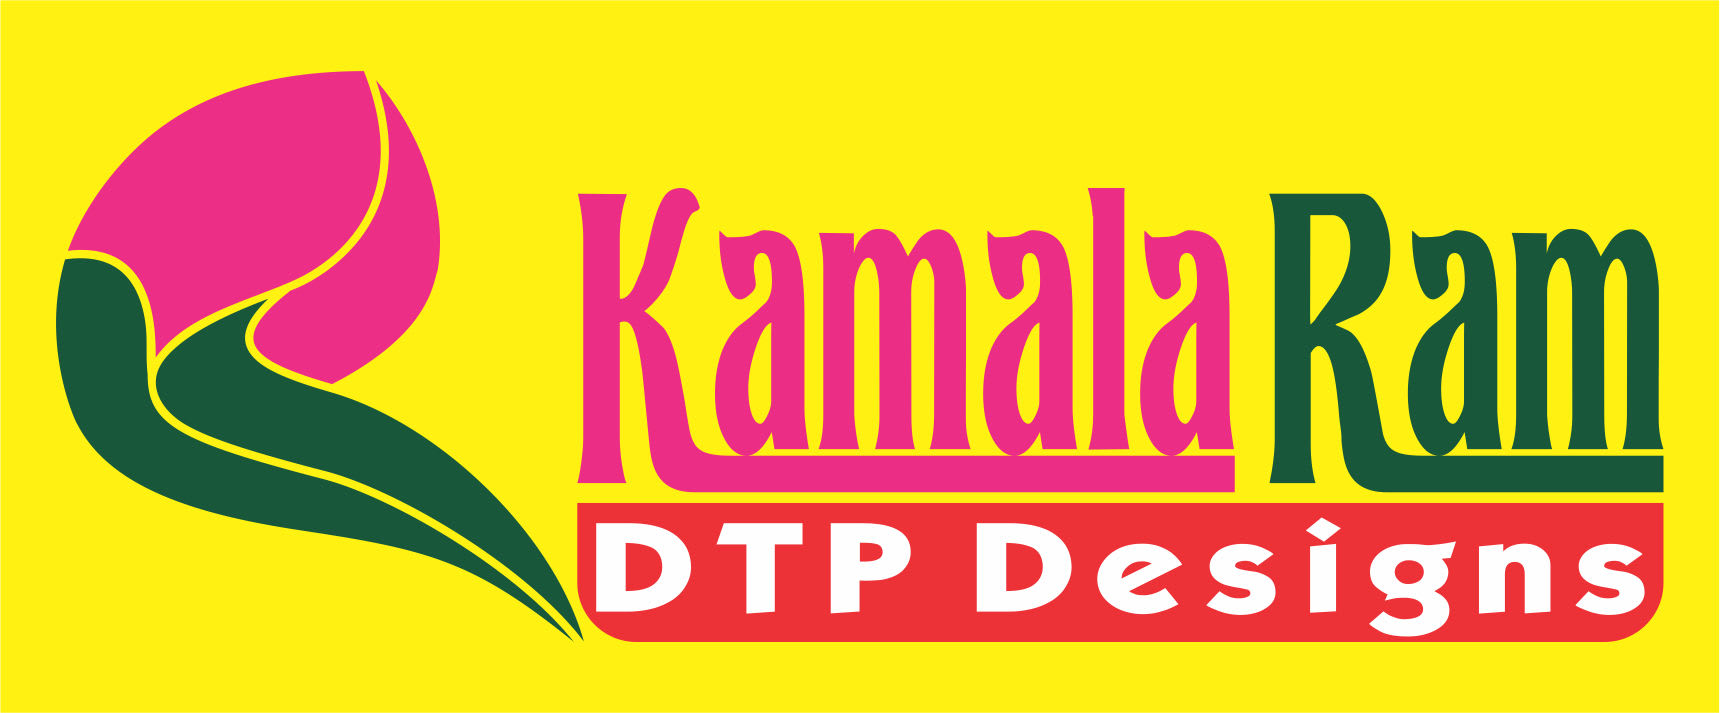 Kamala Ram DTP Designs